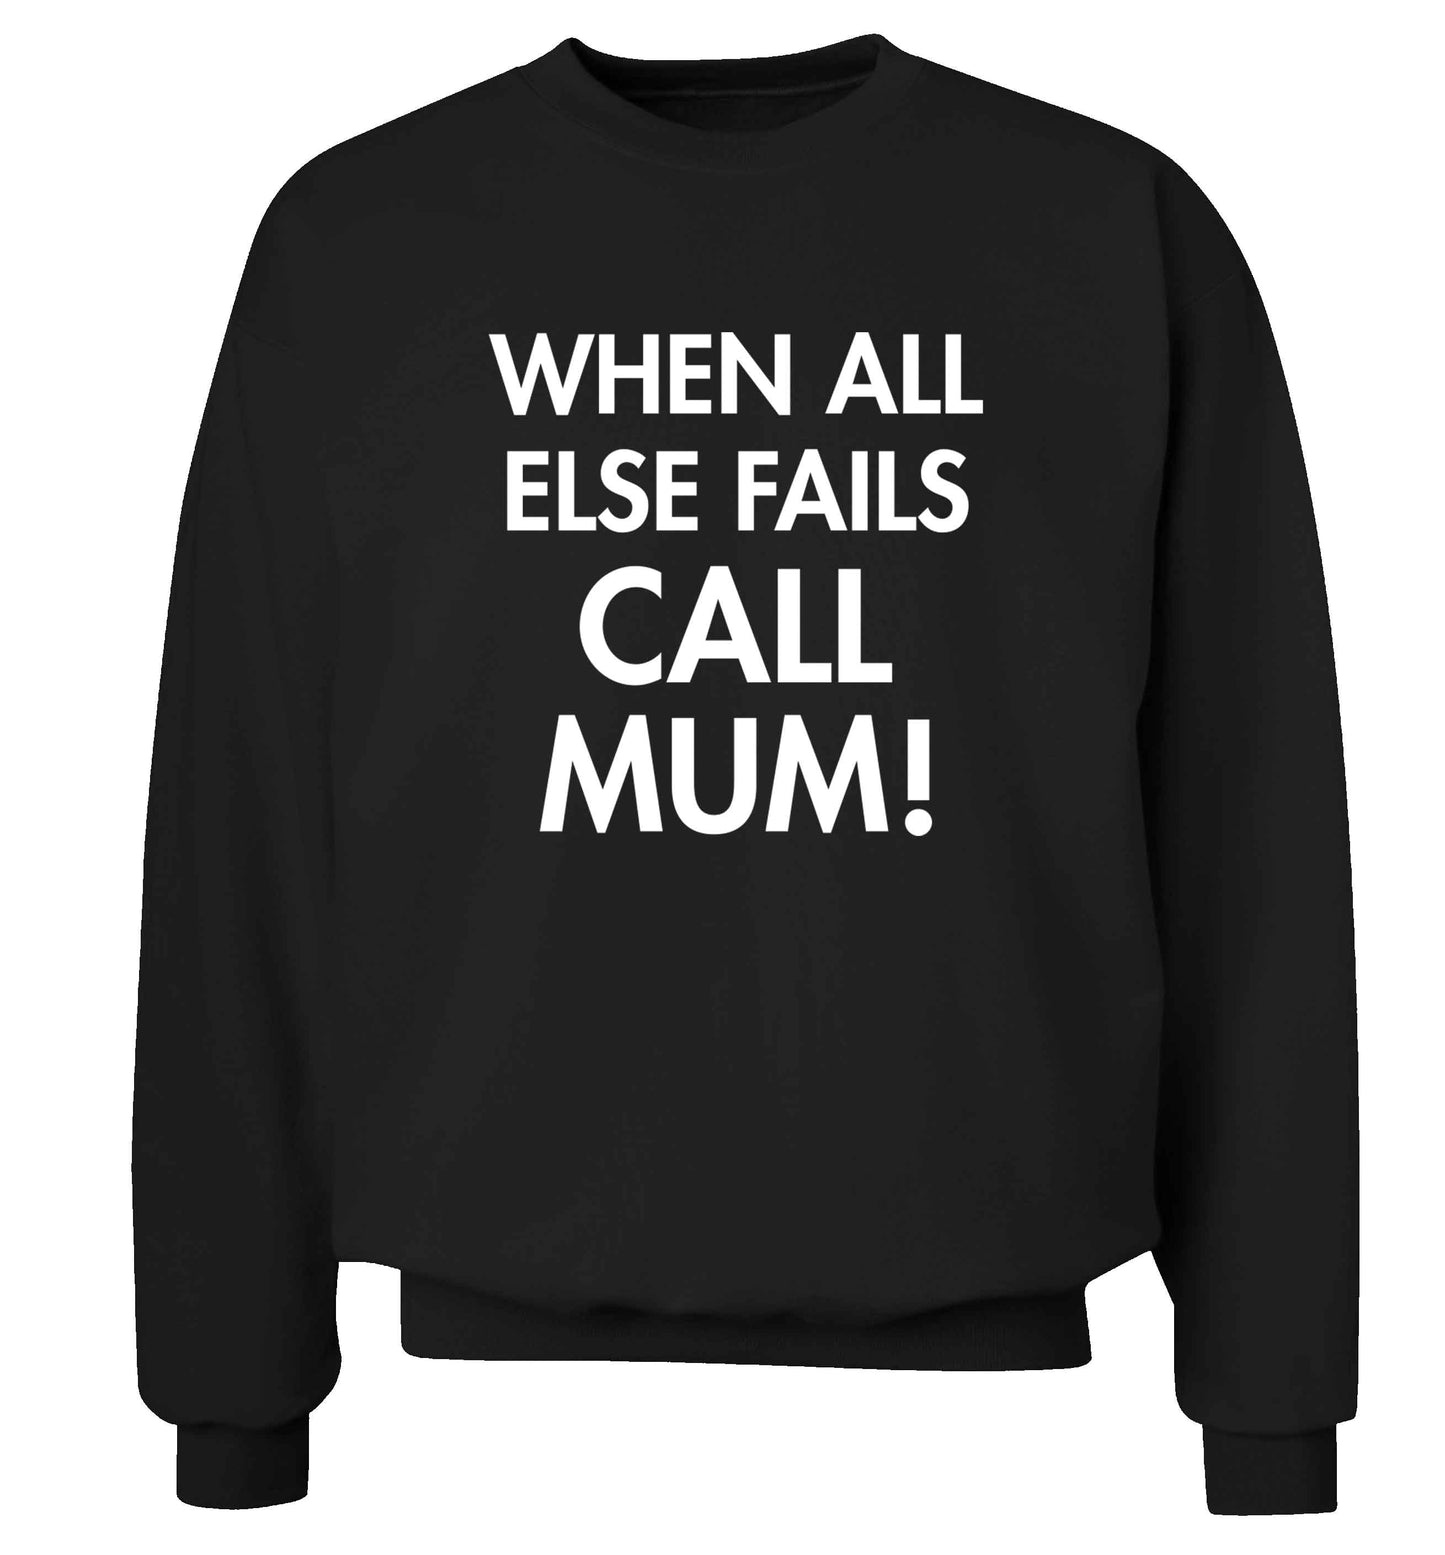 When all else fails call mum! adult's unisex black sweater 2XL